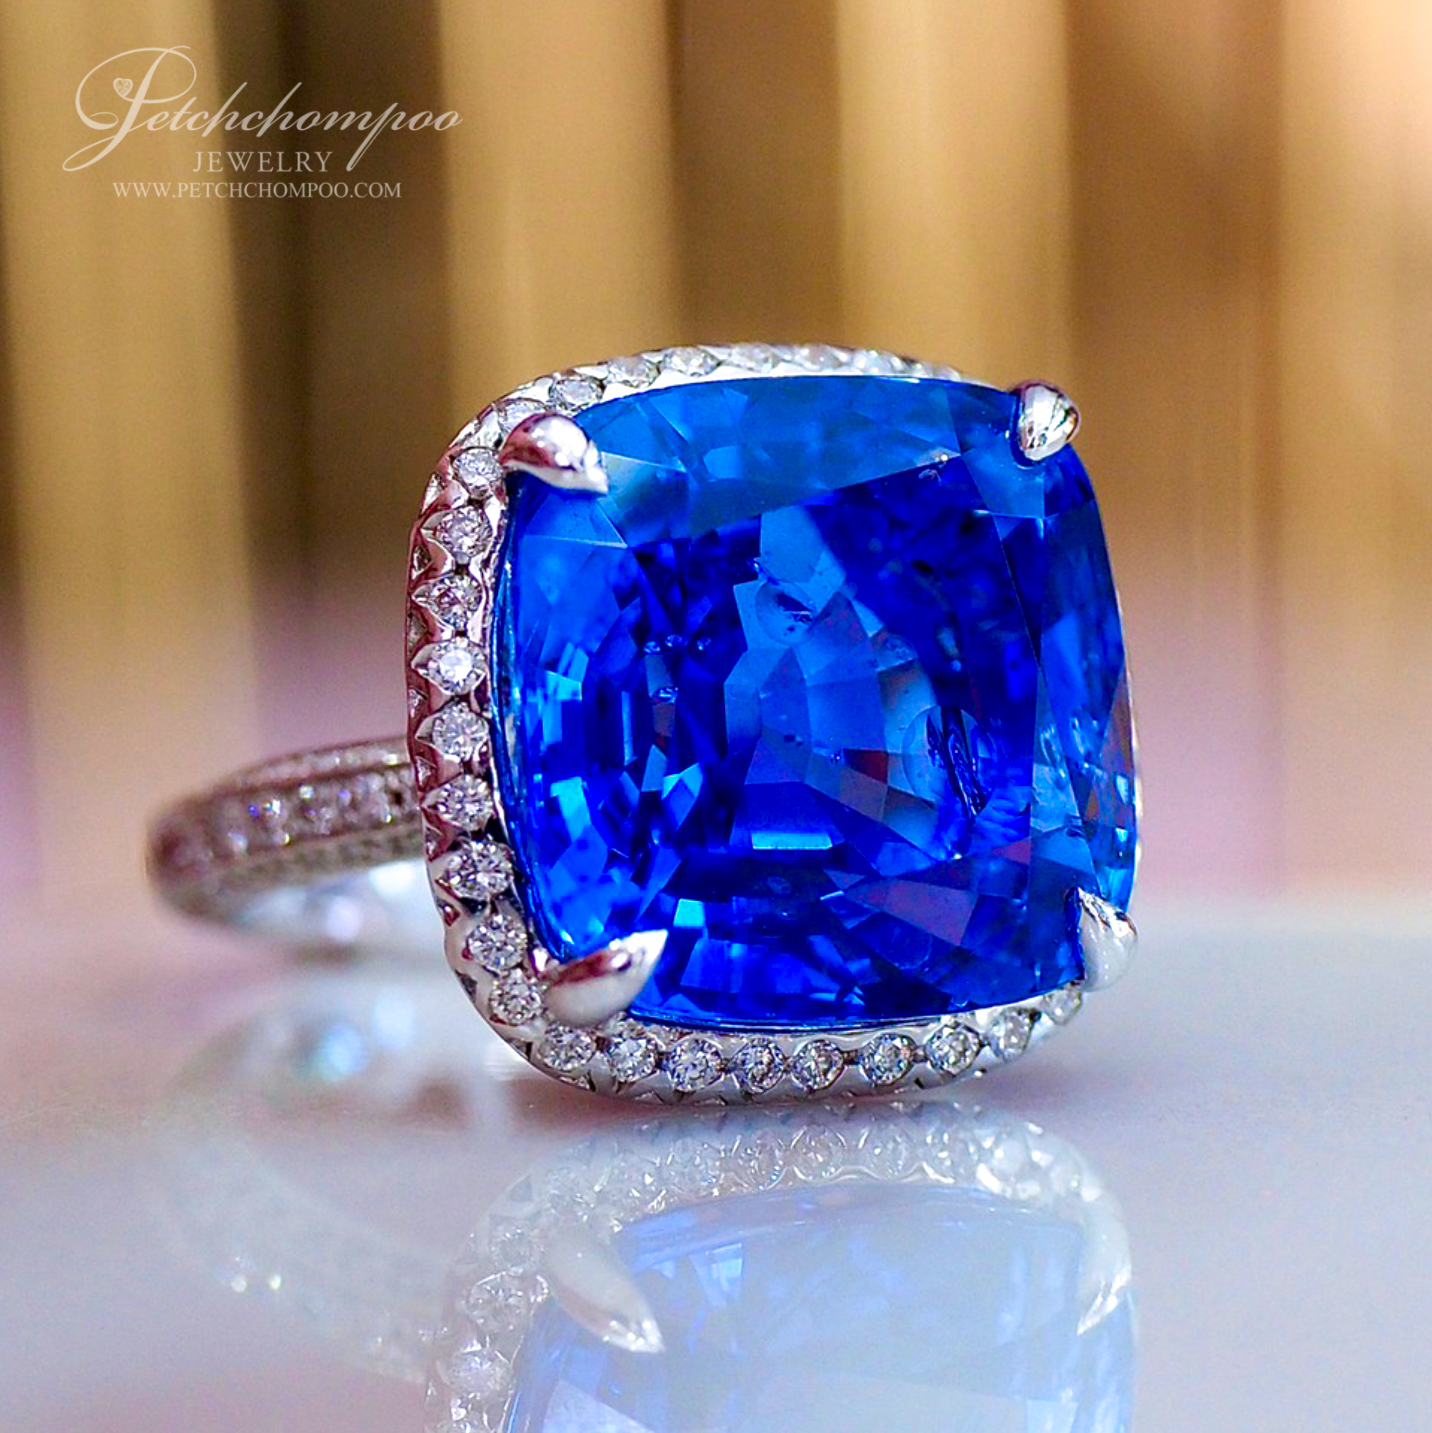 [022349] 22 carat Vivid Blue sapphire With Diamond Ring Discount 1,490,000